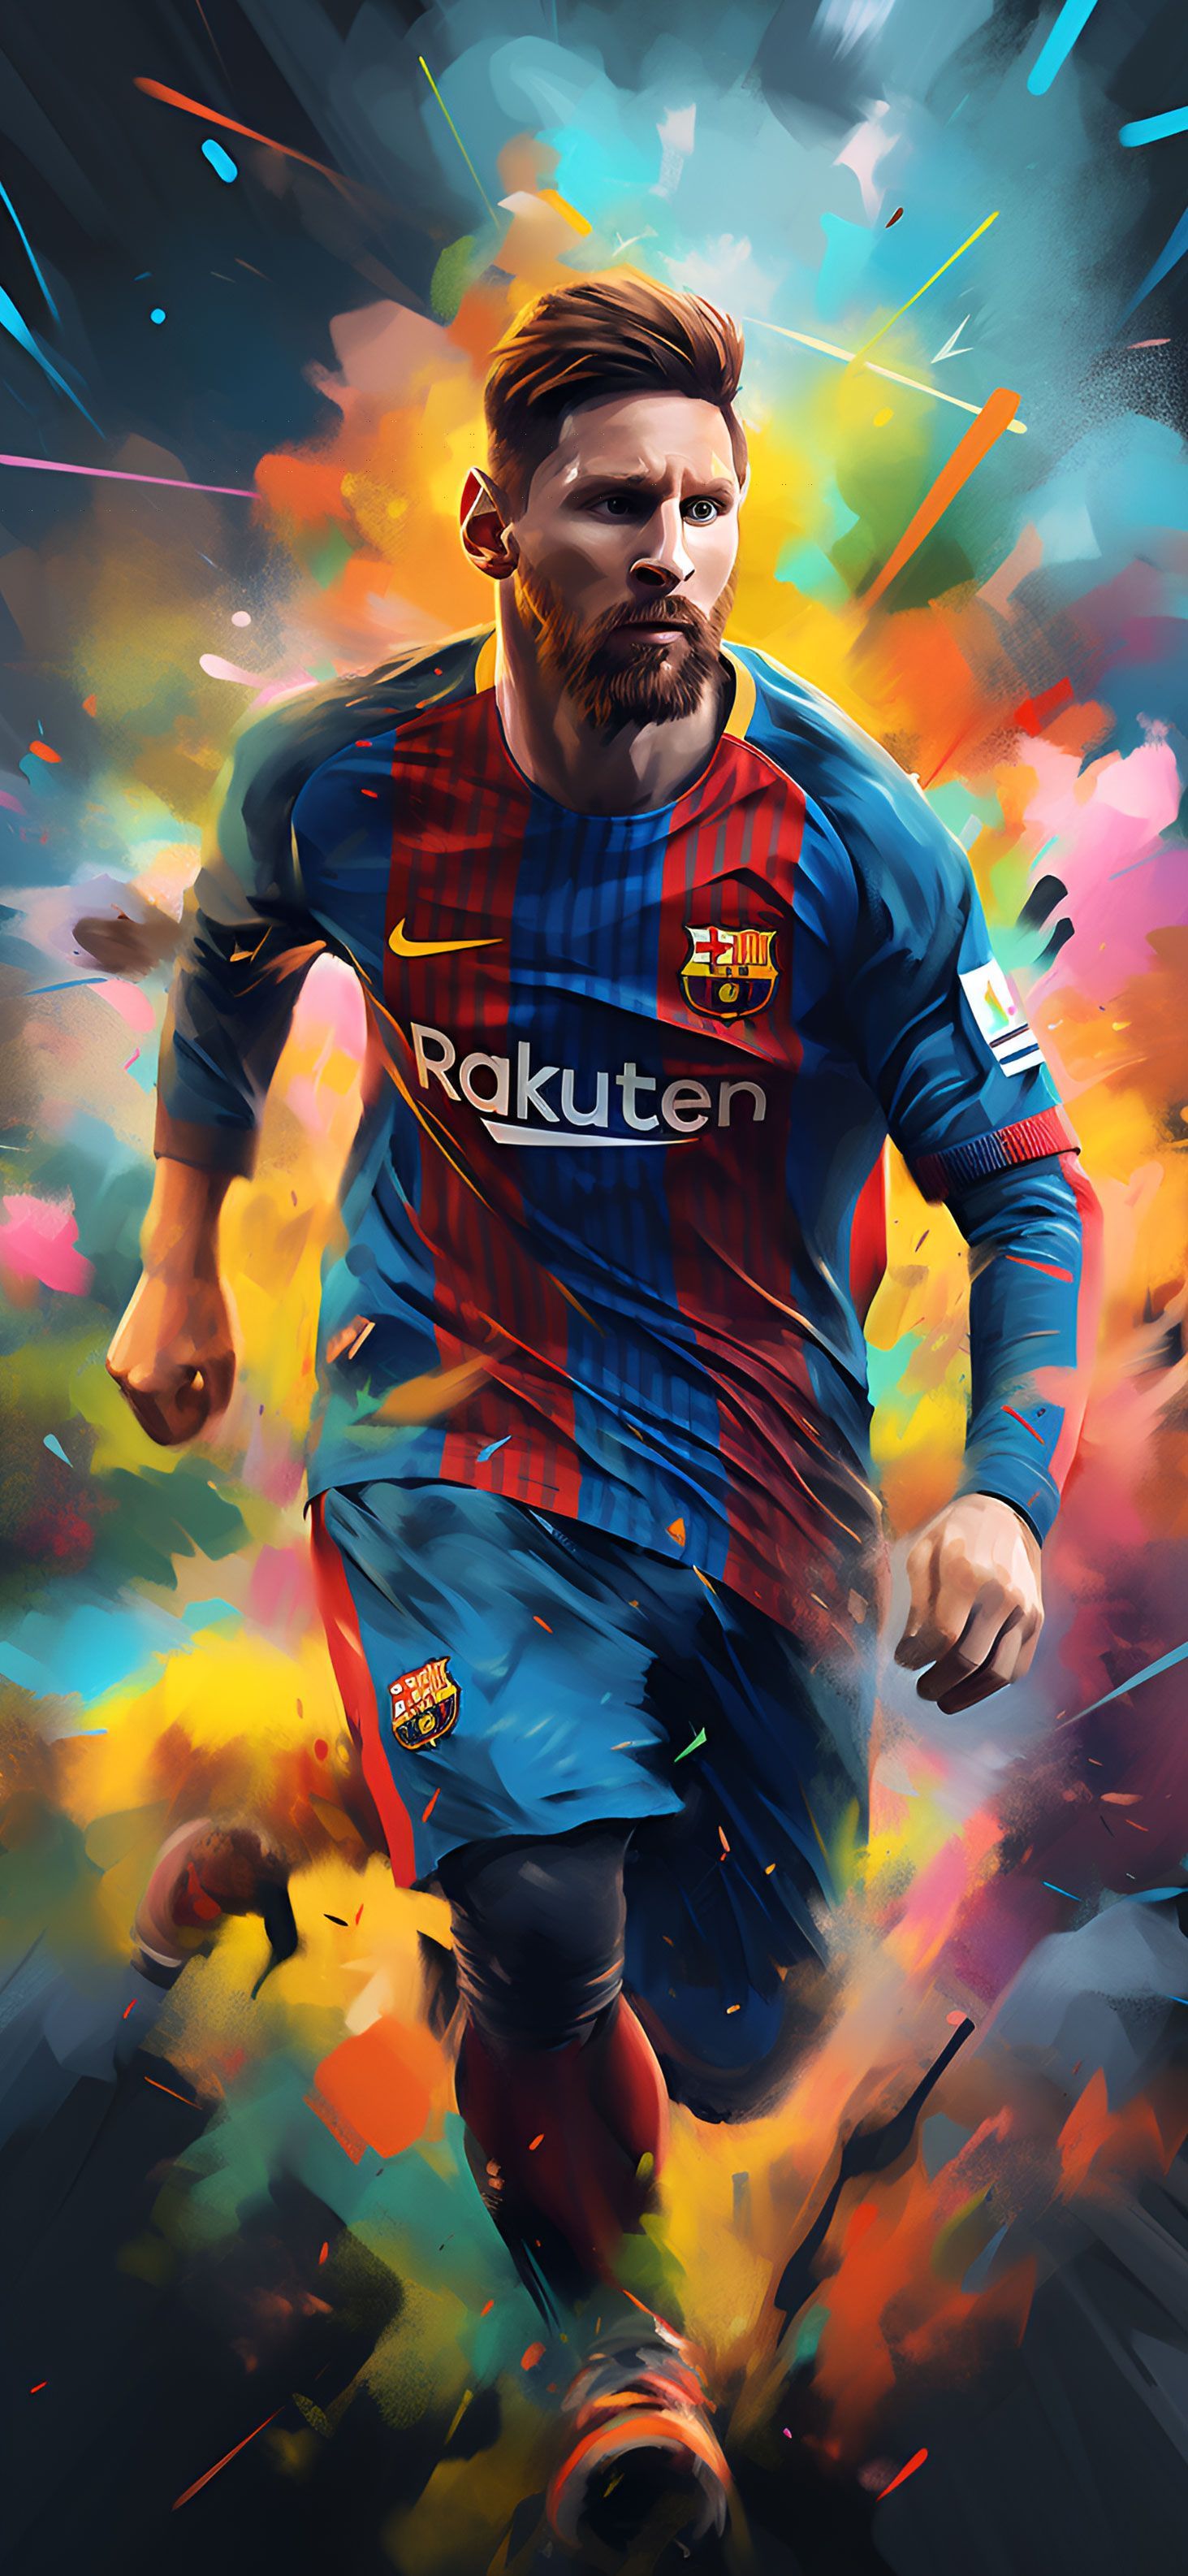 Lionel Messi in Barcelona uniform art wallpaper. - Messi